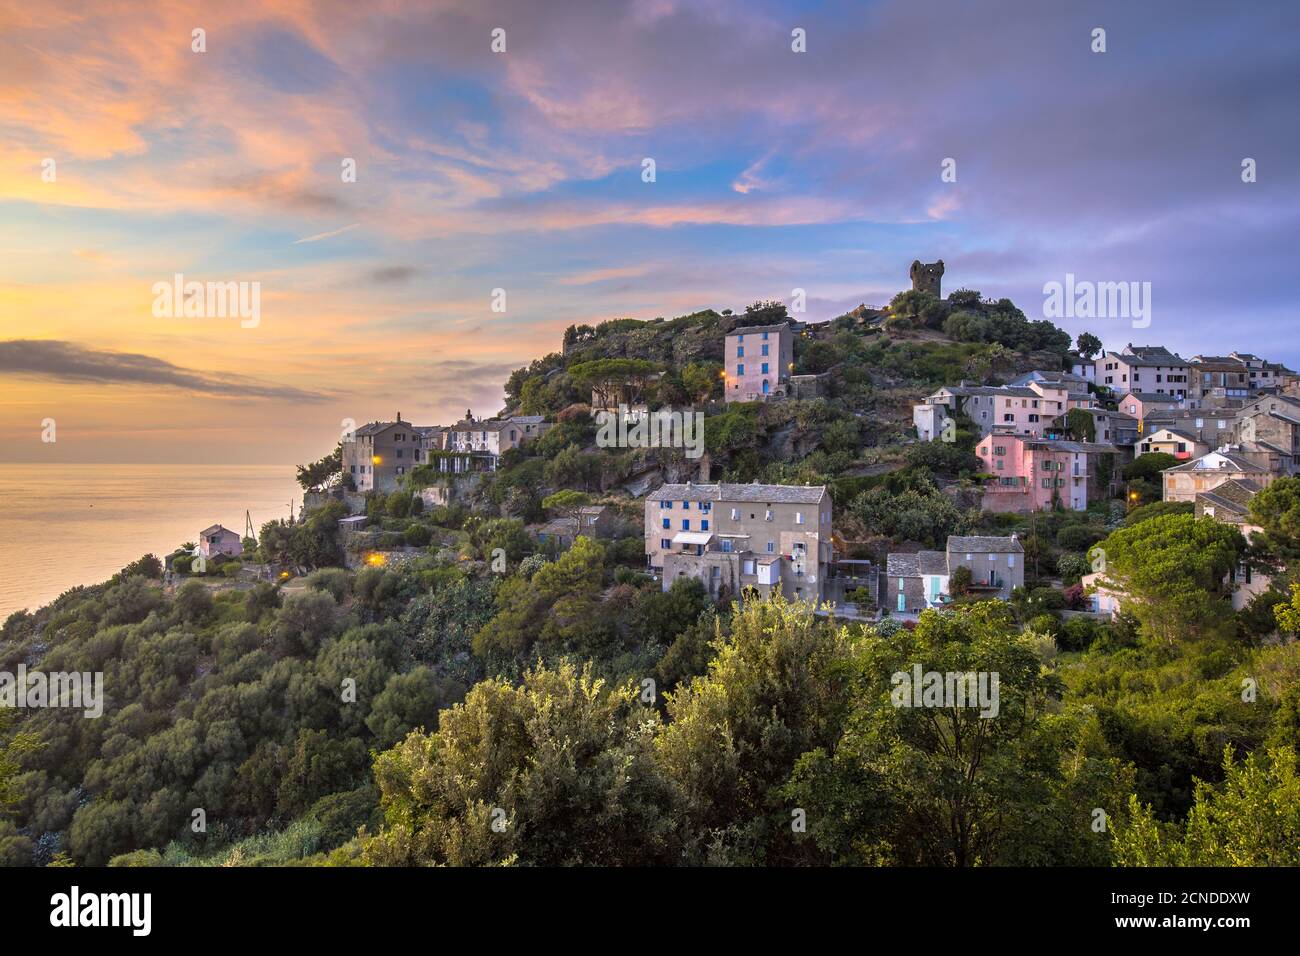 Mountain Village of Nonza with view over the mediteranean sea on Cap corse, Corsica, France Stock Photo